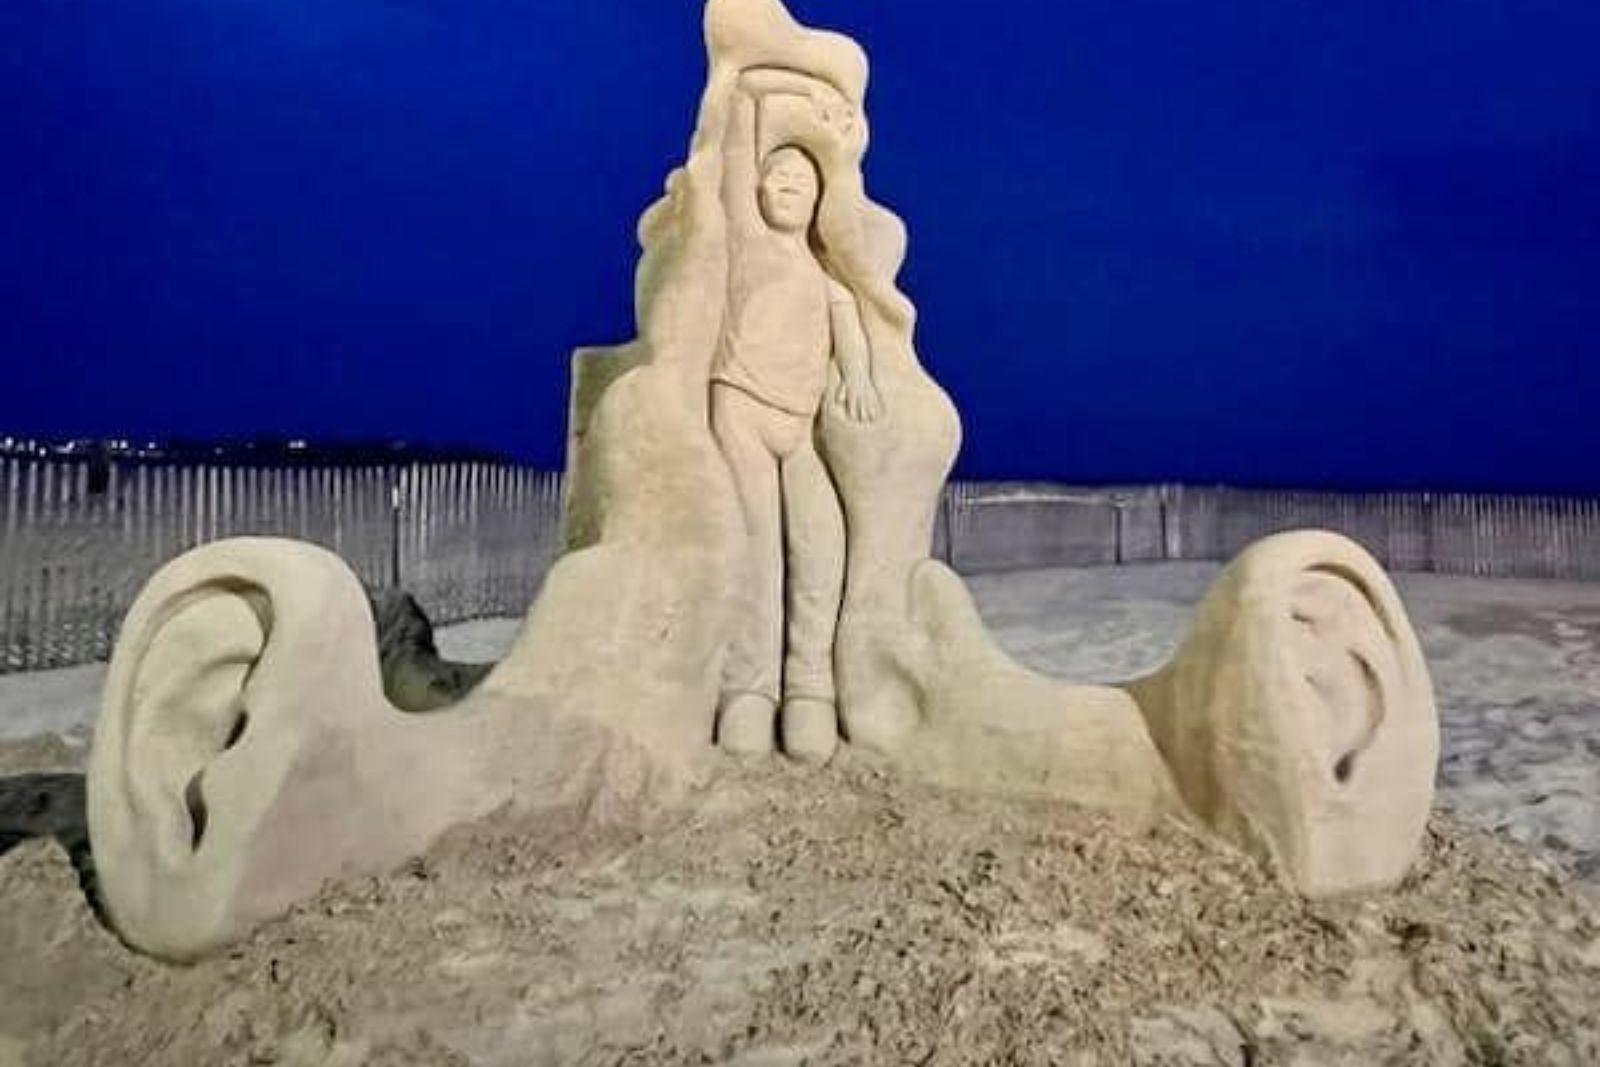 23rd Annual Hampton Beach Sand Sculpting Classic - a sight worth seeing